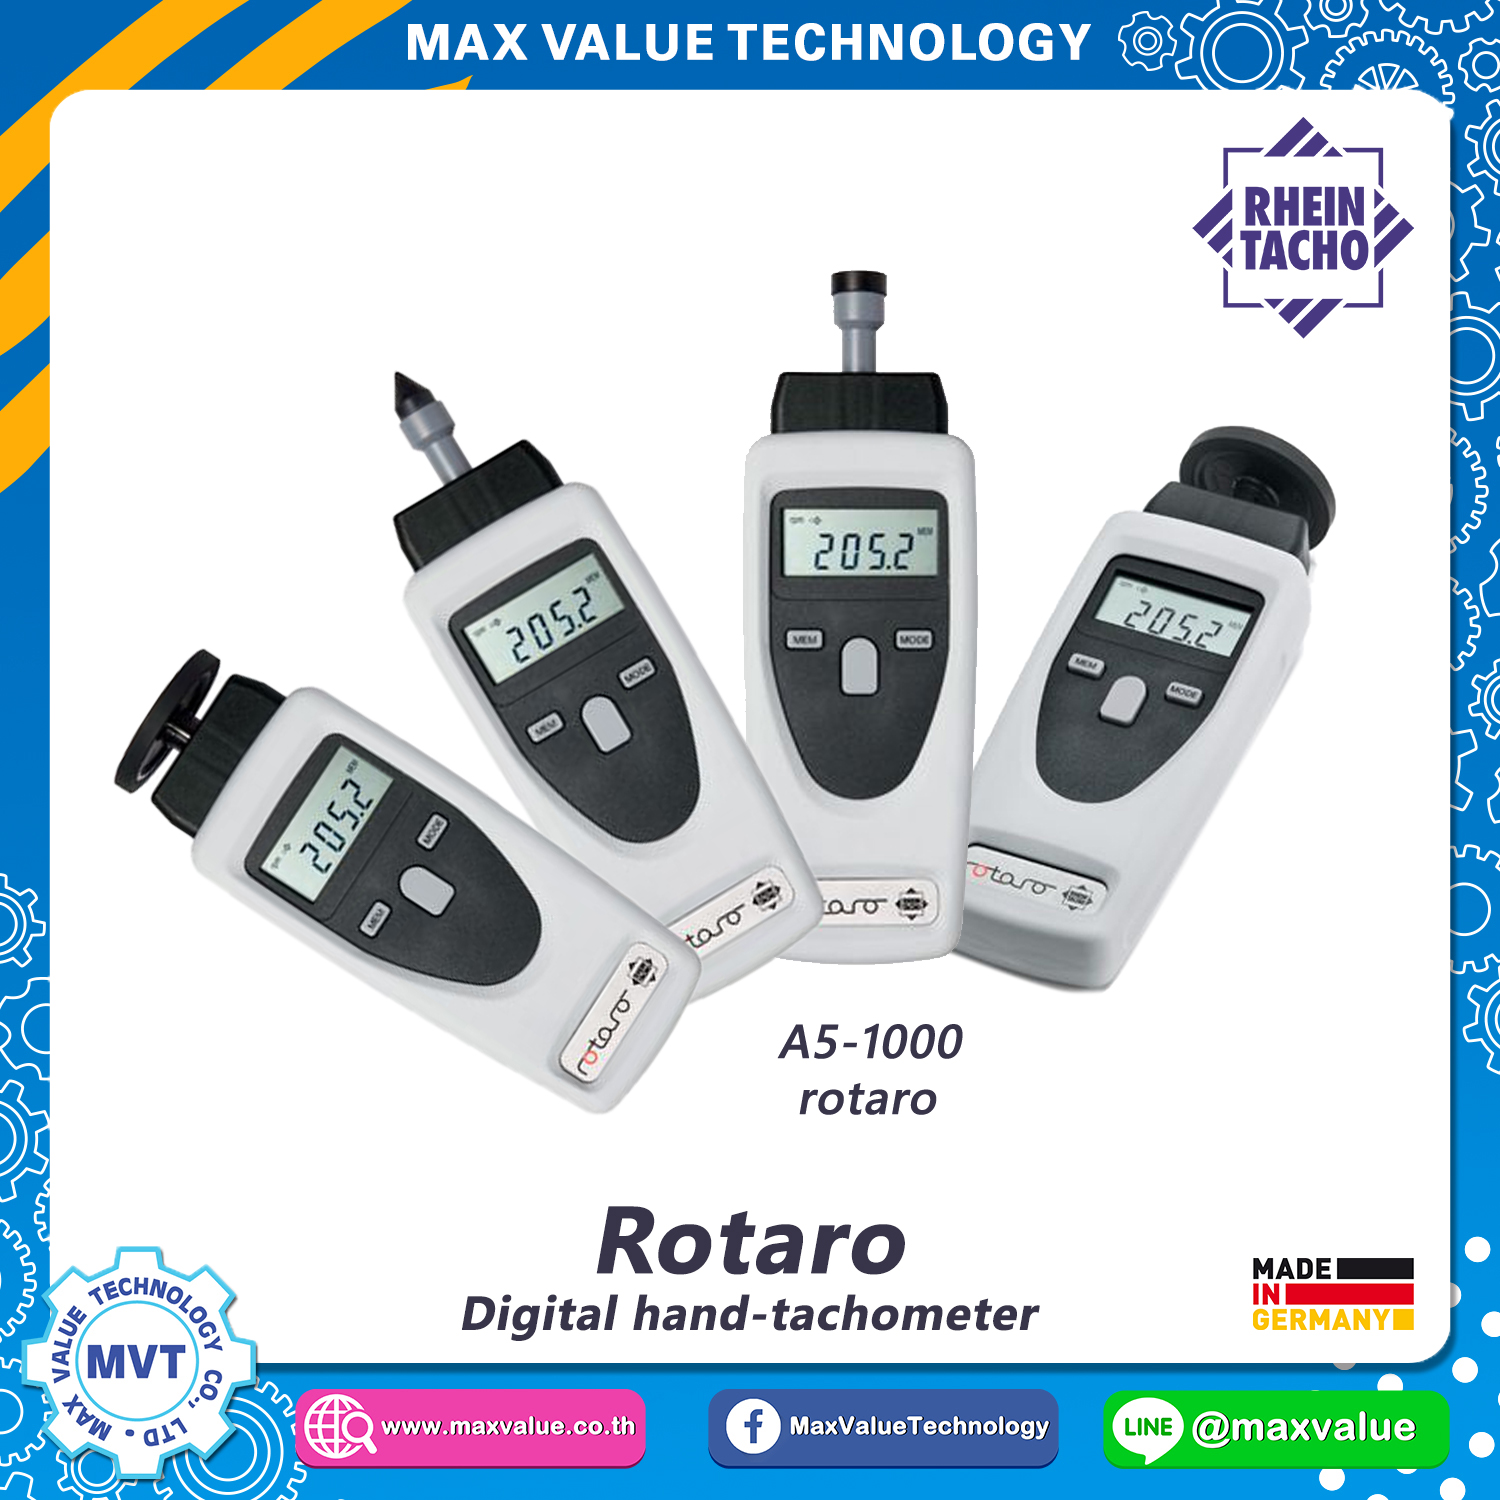 Digital hand-tachometer rotaro